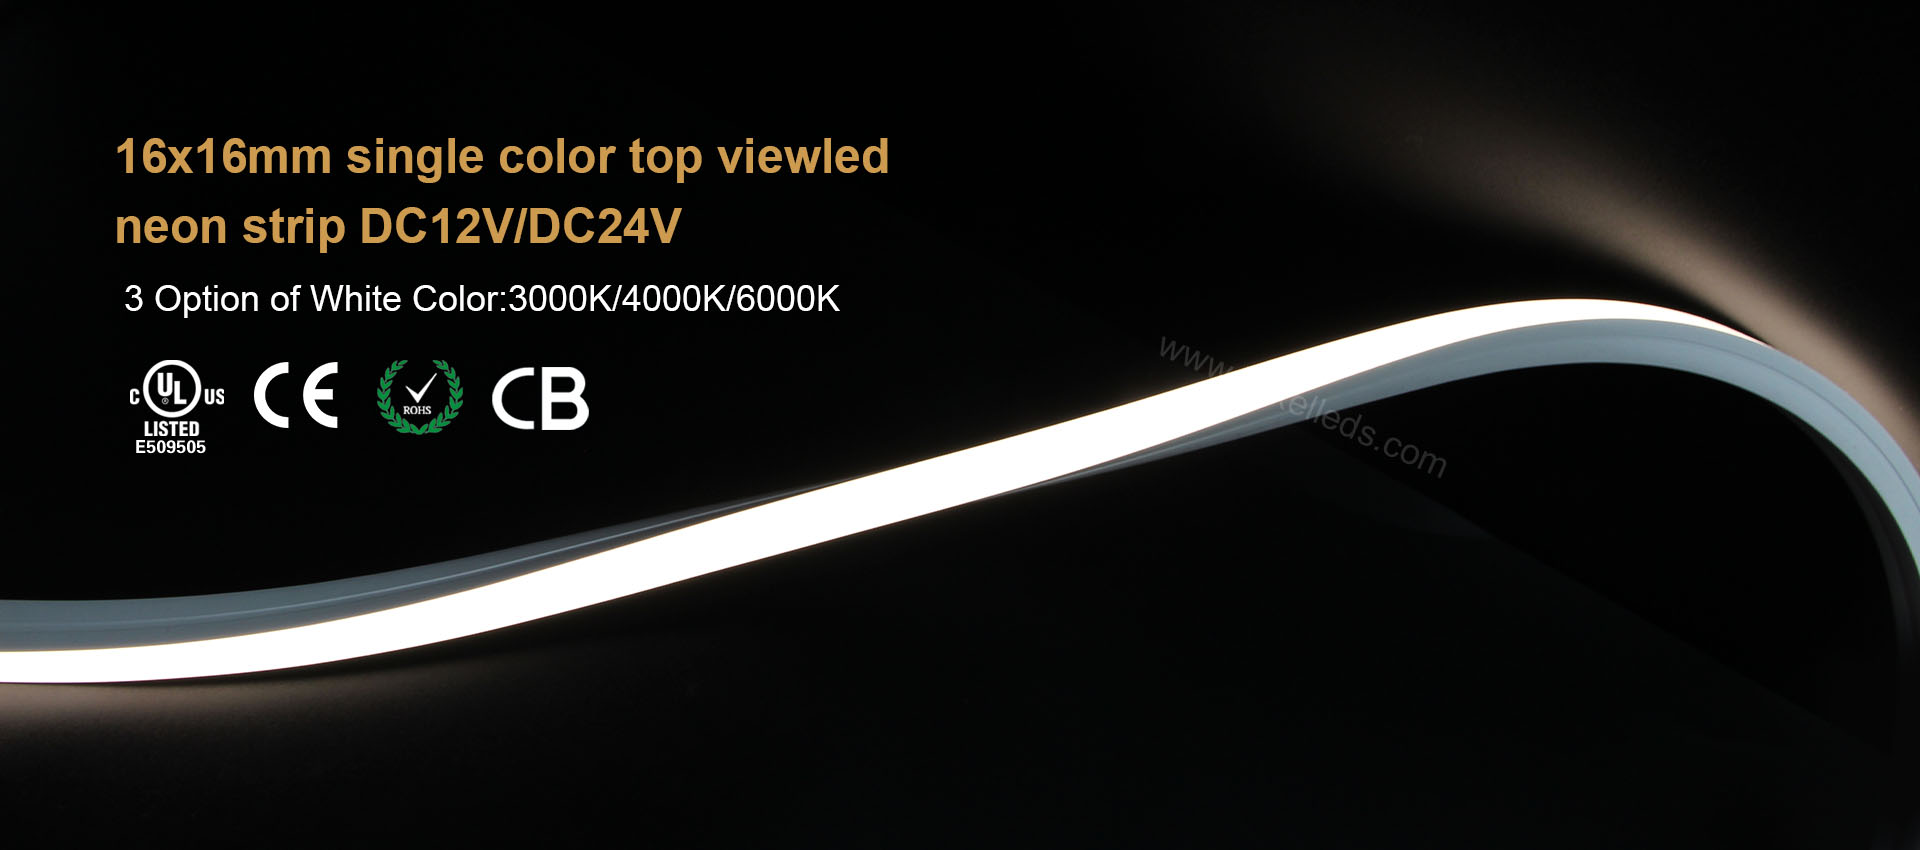 RGB XL PixelControl LED Strip Light, 60/m, 12mm wide, by the 5m Reel